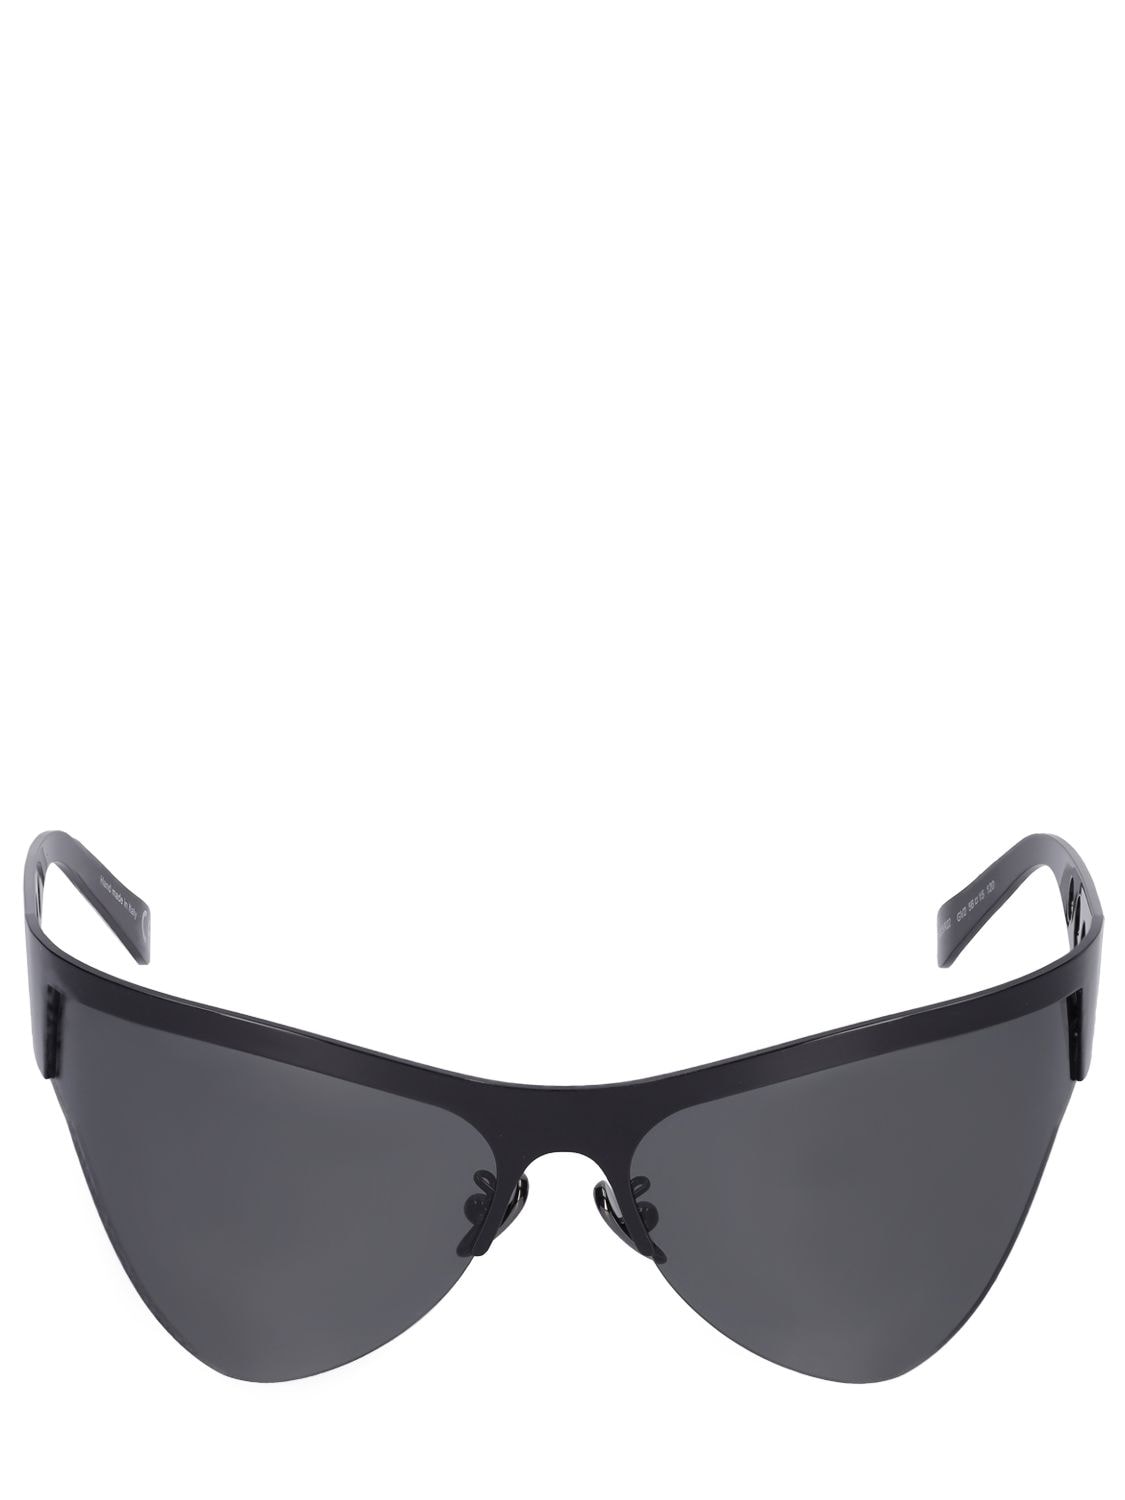 Image of Mauna Lola Black Metal Sunglasses